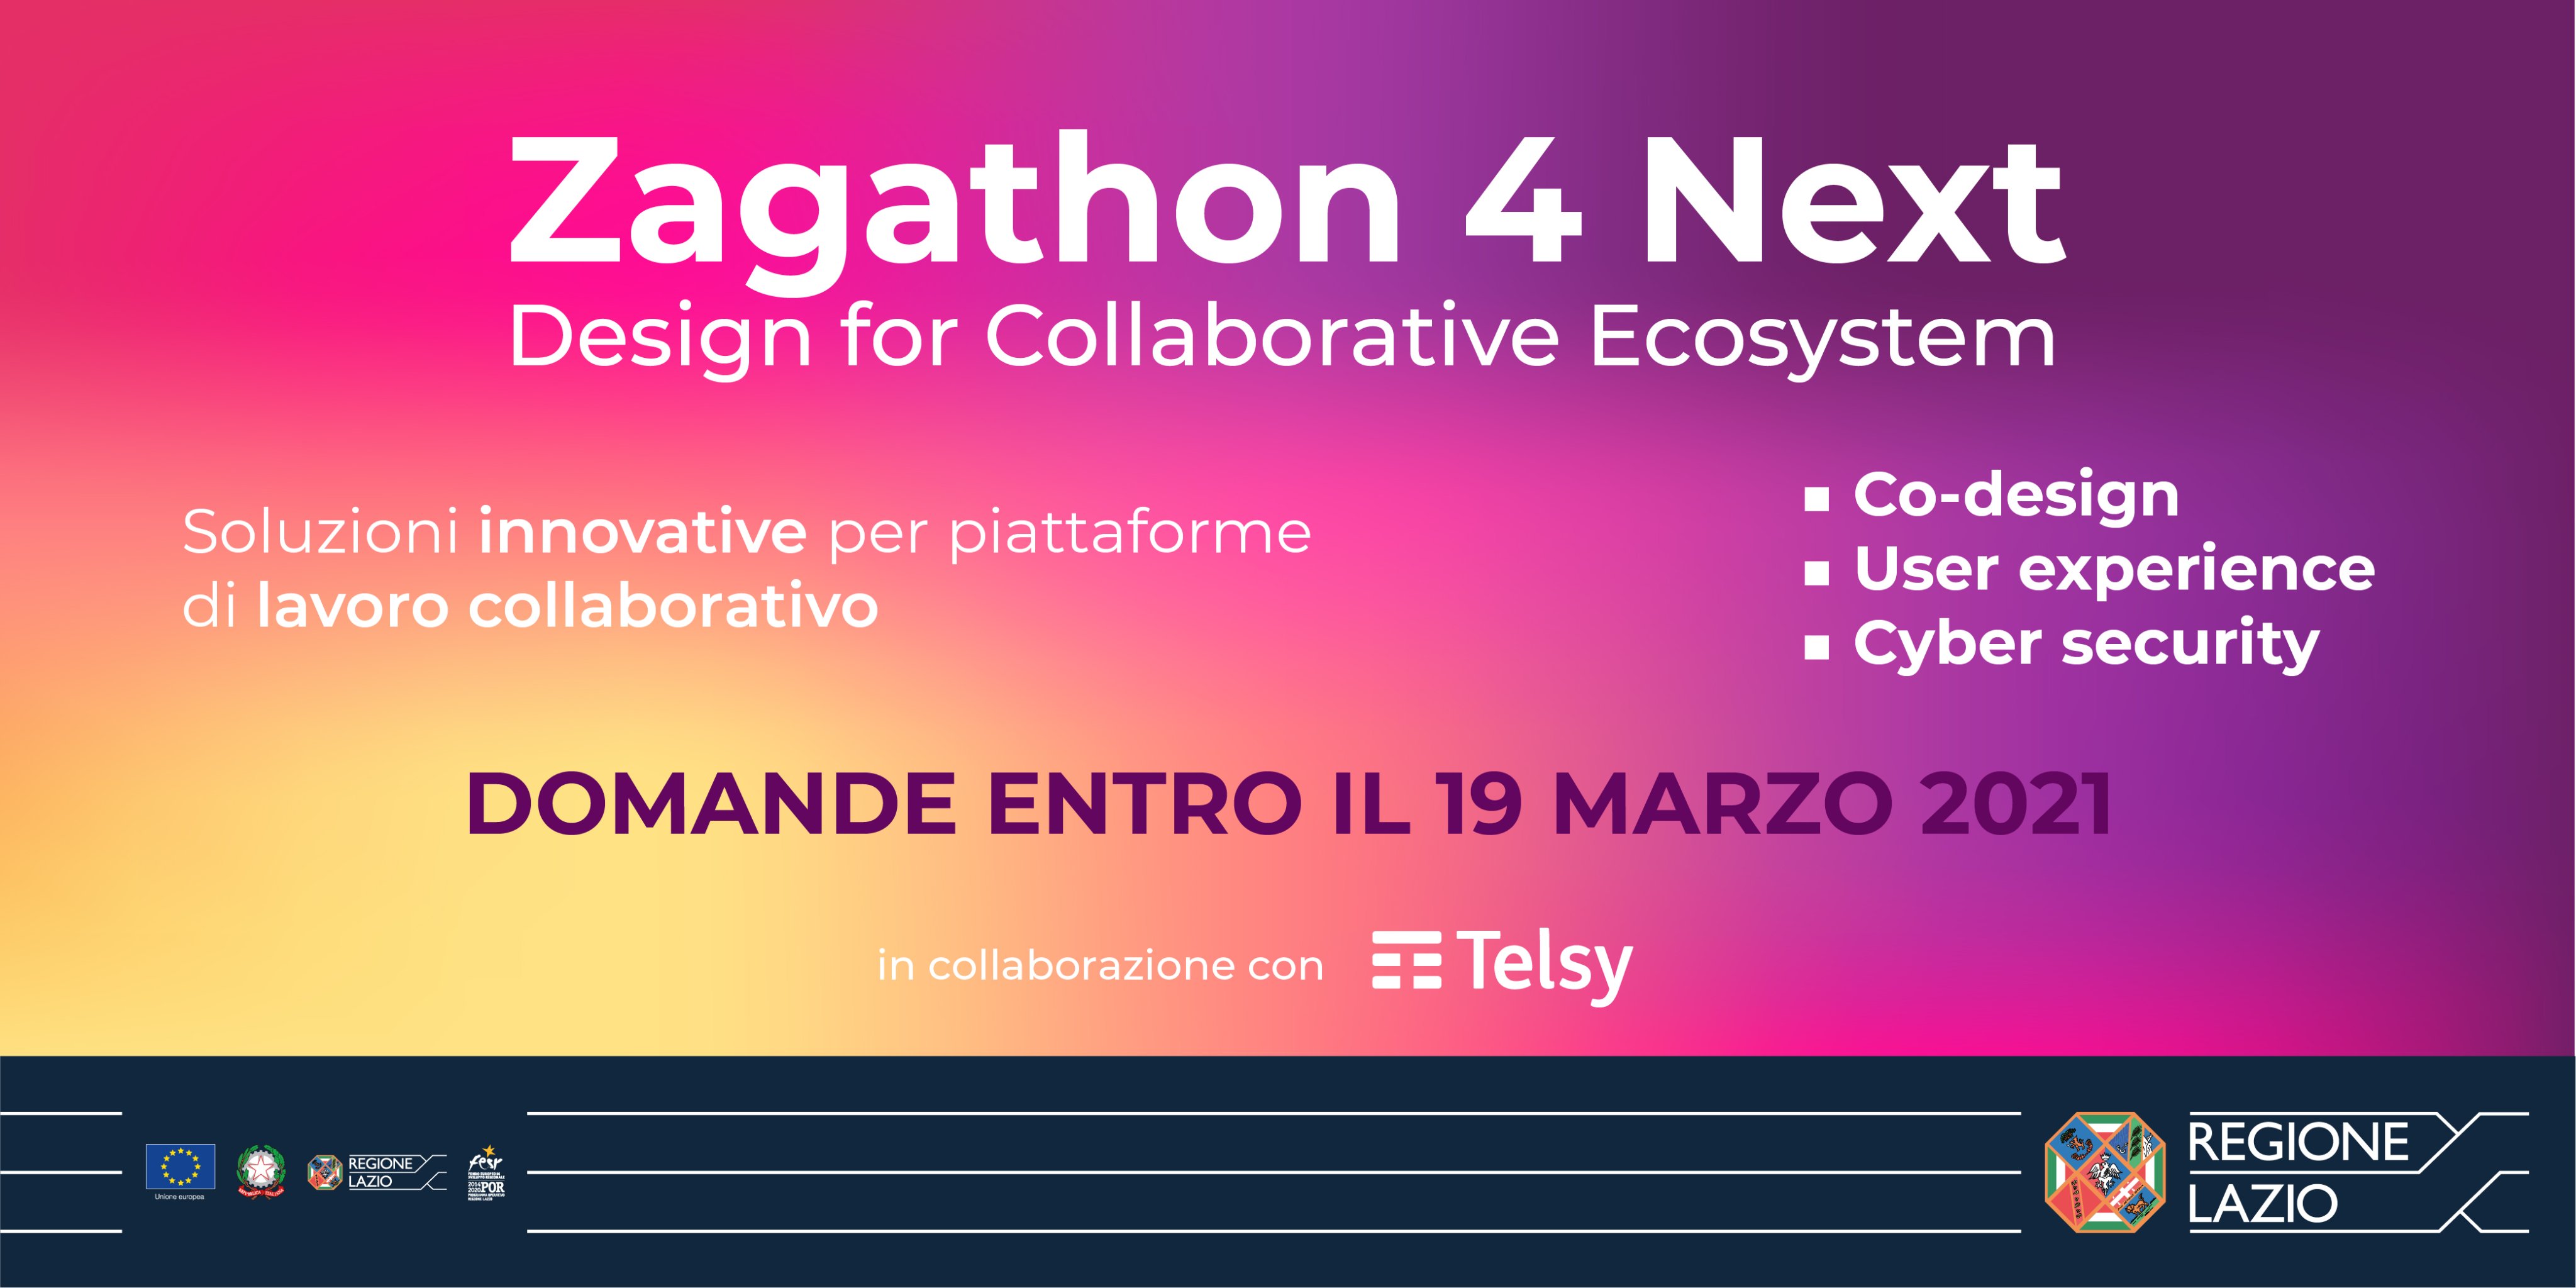 Zagathon 4 Next – Design for Collaborative Ecosystem